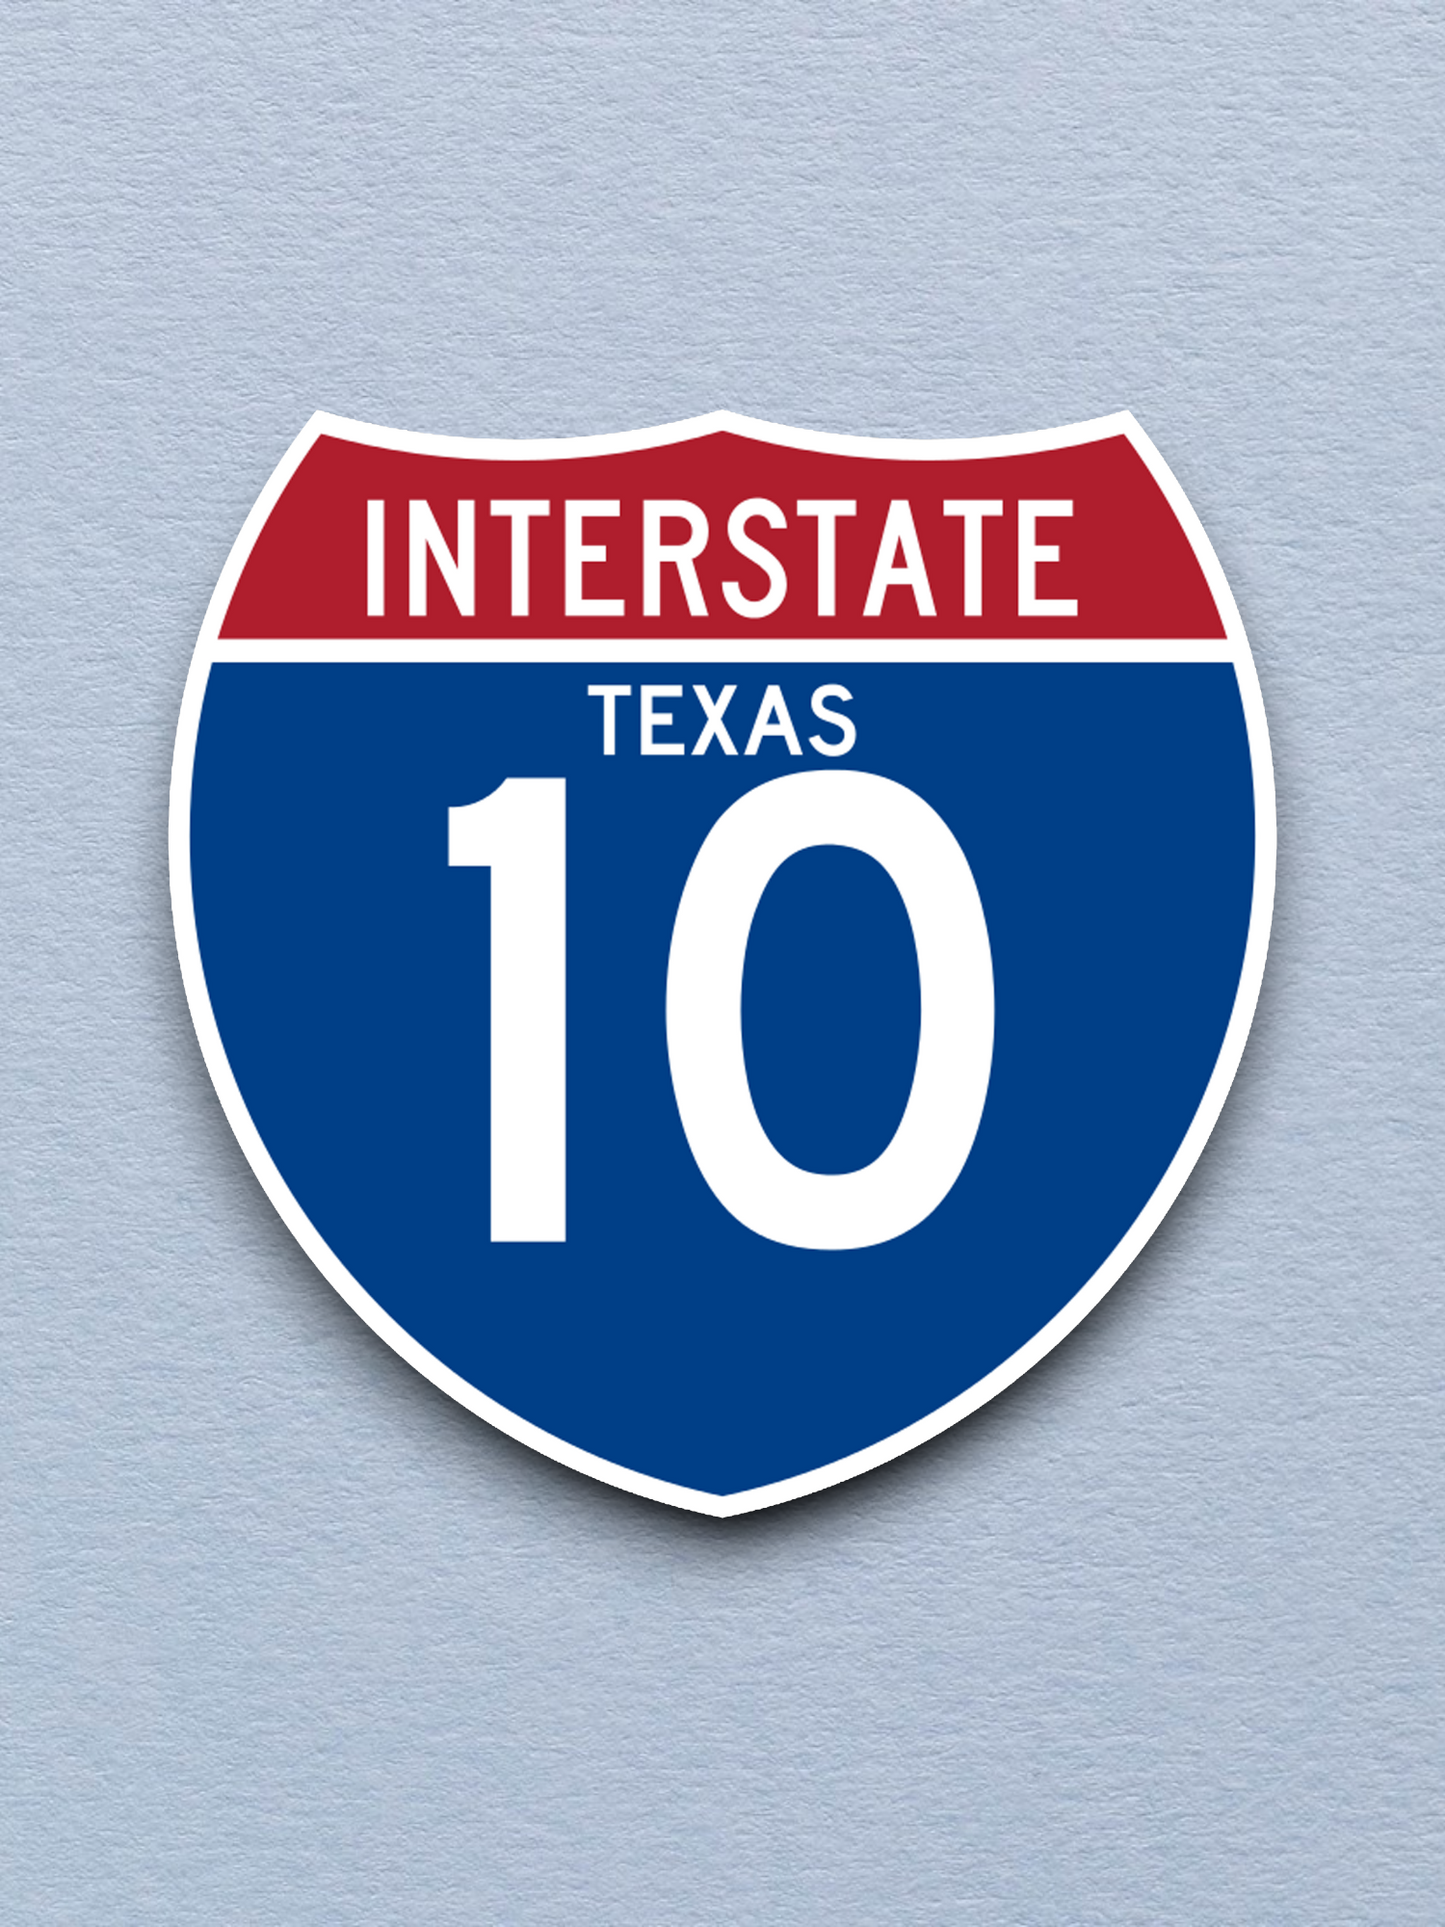 Interstate I-10 Texas - Road Sign Sticker